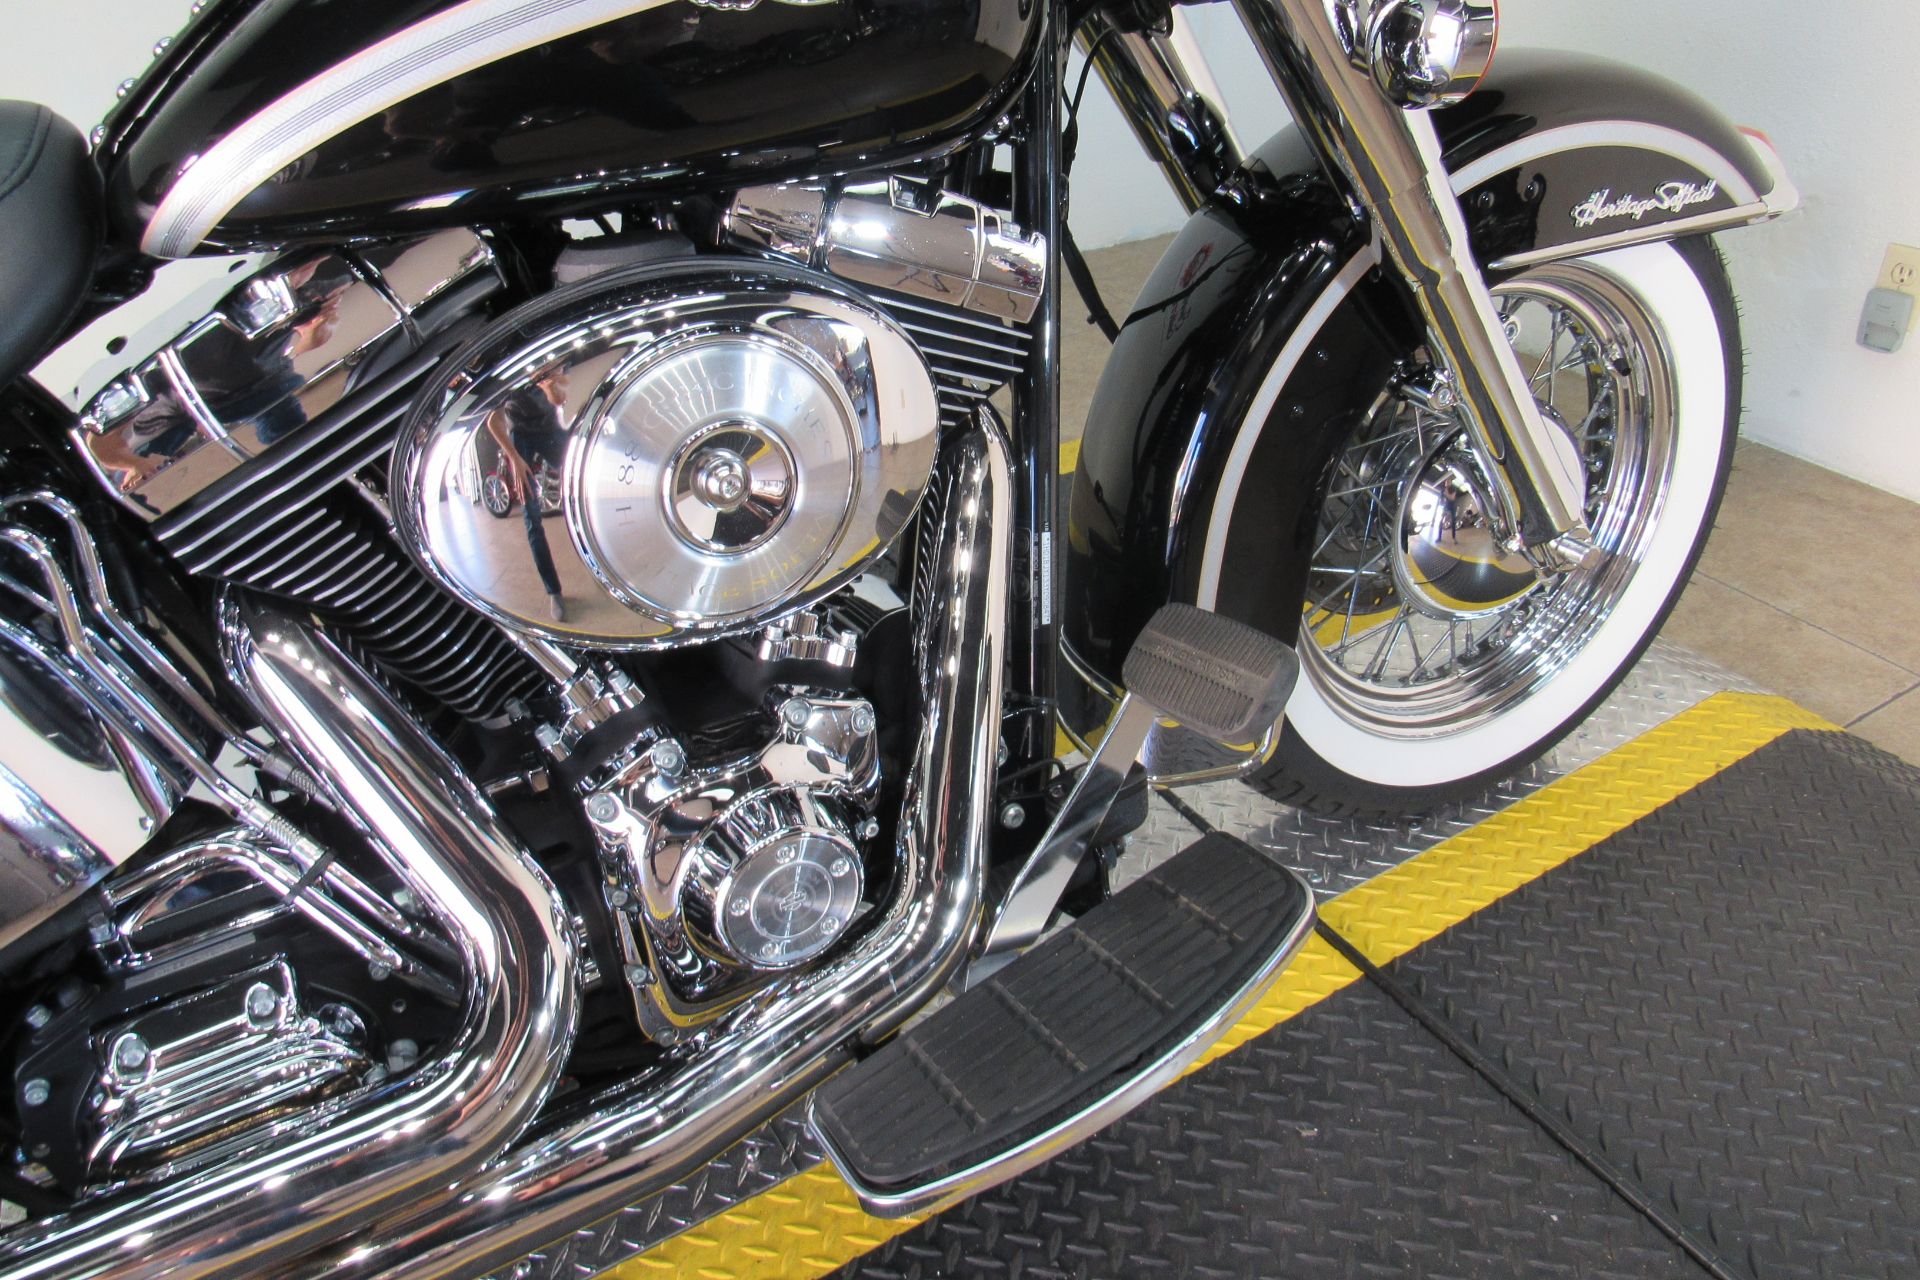 2003 Harley-Davidson HERITAGE in Temecula, California - Photo 15